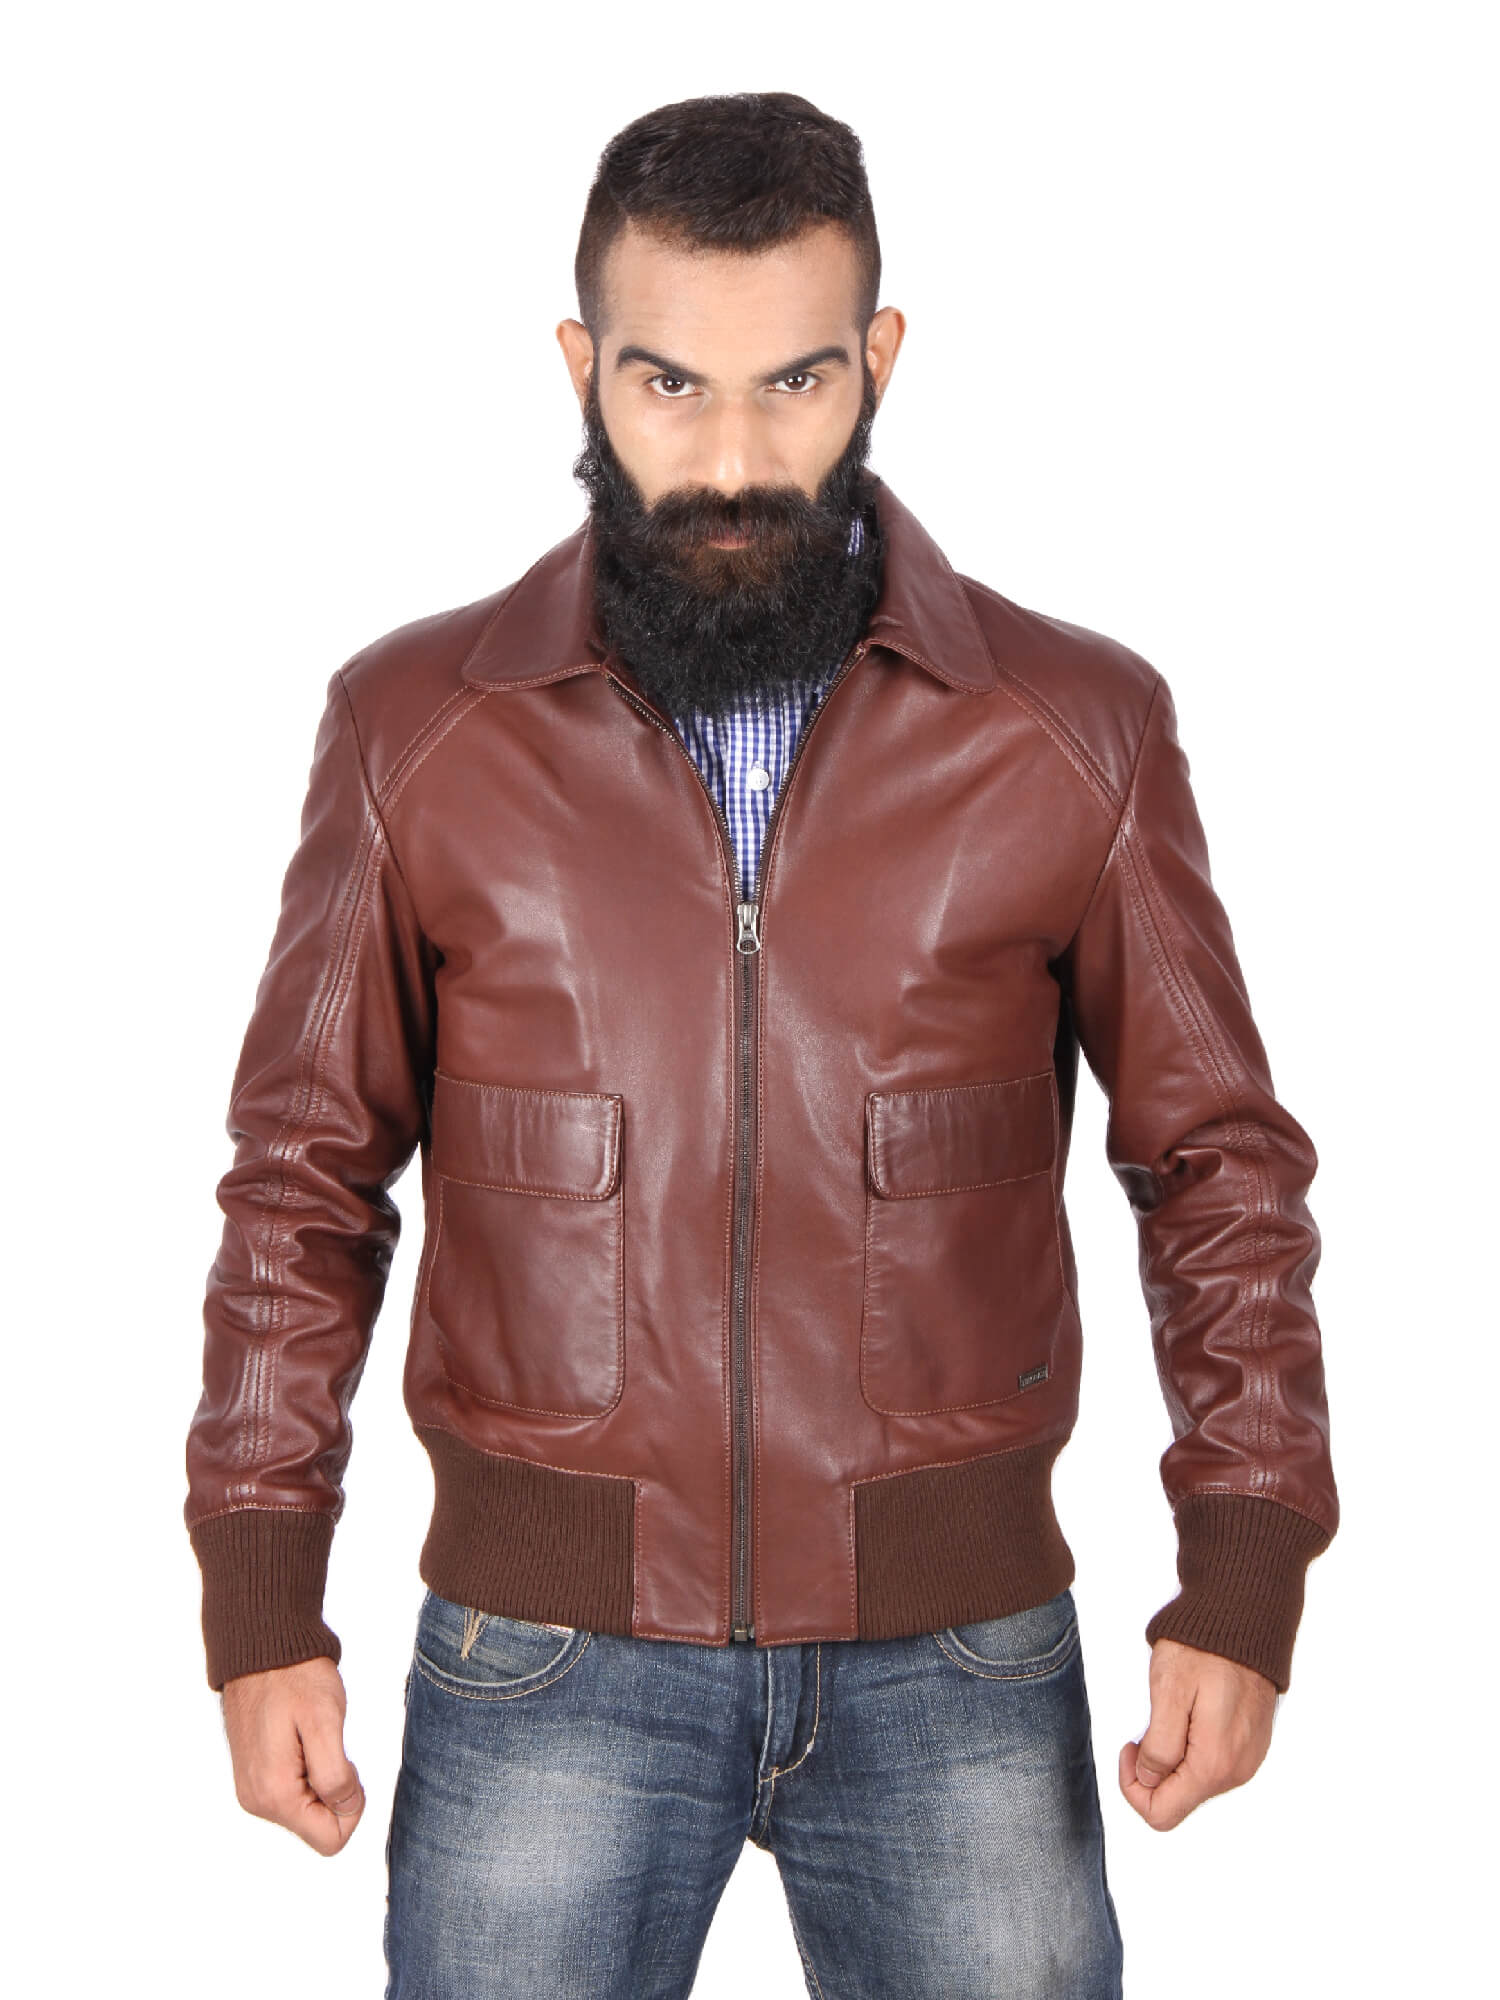 Theo&Ash - Biker jacket men | Black leather jacket men's | Classic leather  jackets